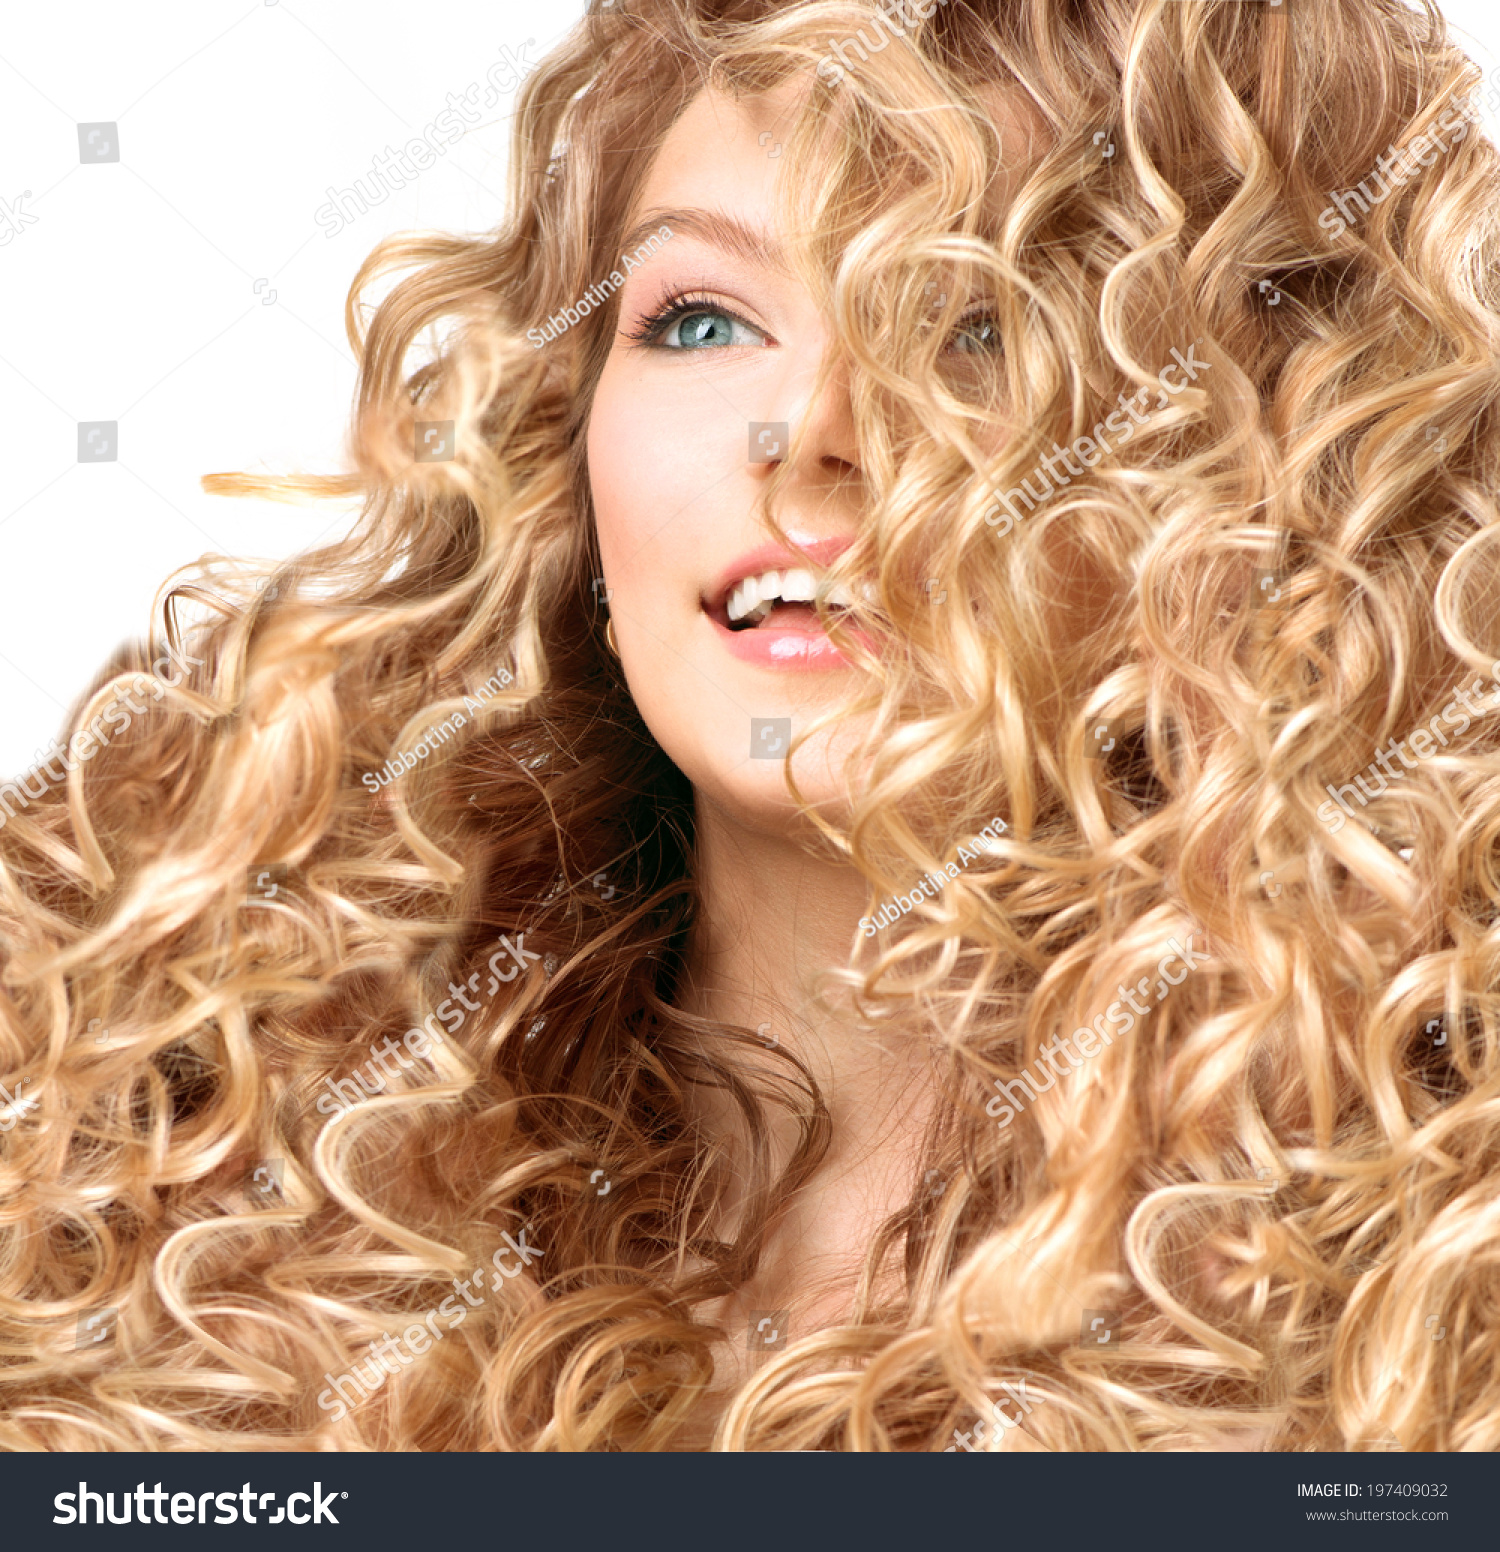 41 Hq Photos Blonde Curl Hair 50 Natural Curly Hairstyles Curly Hair 